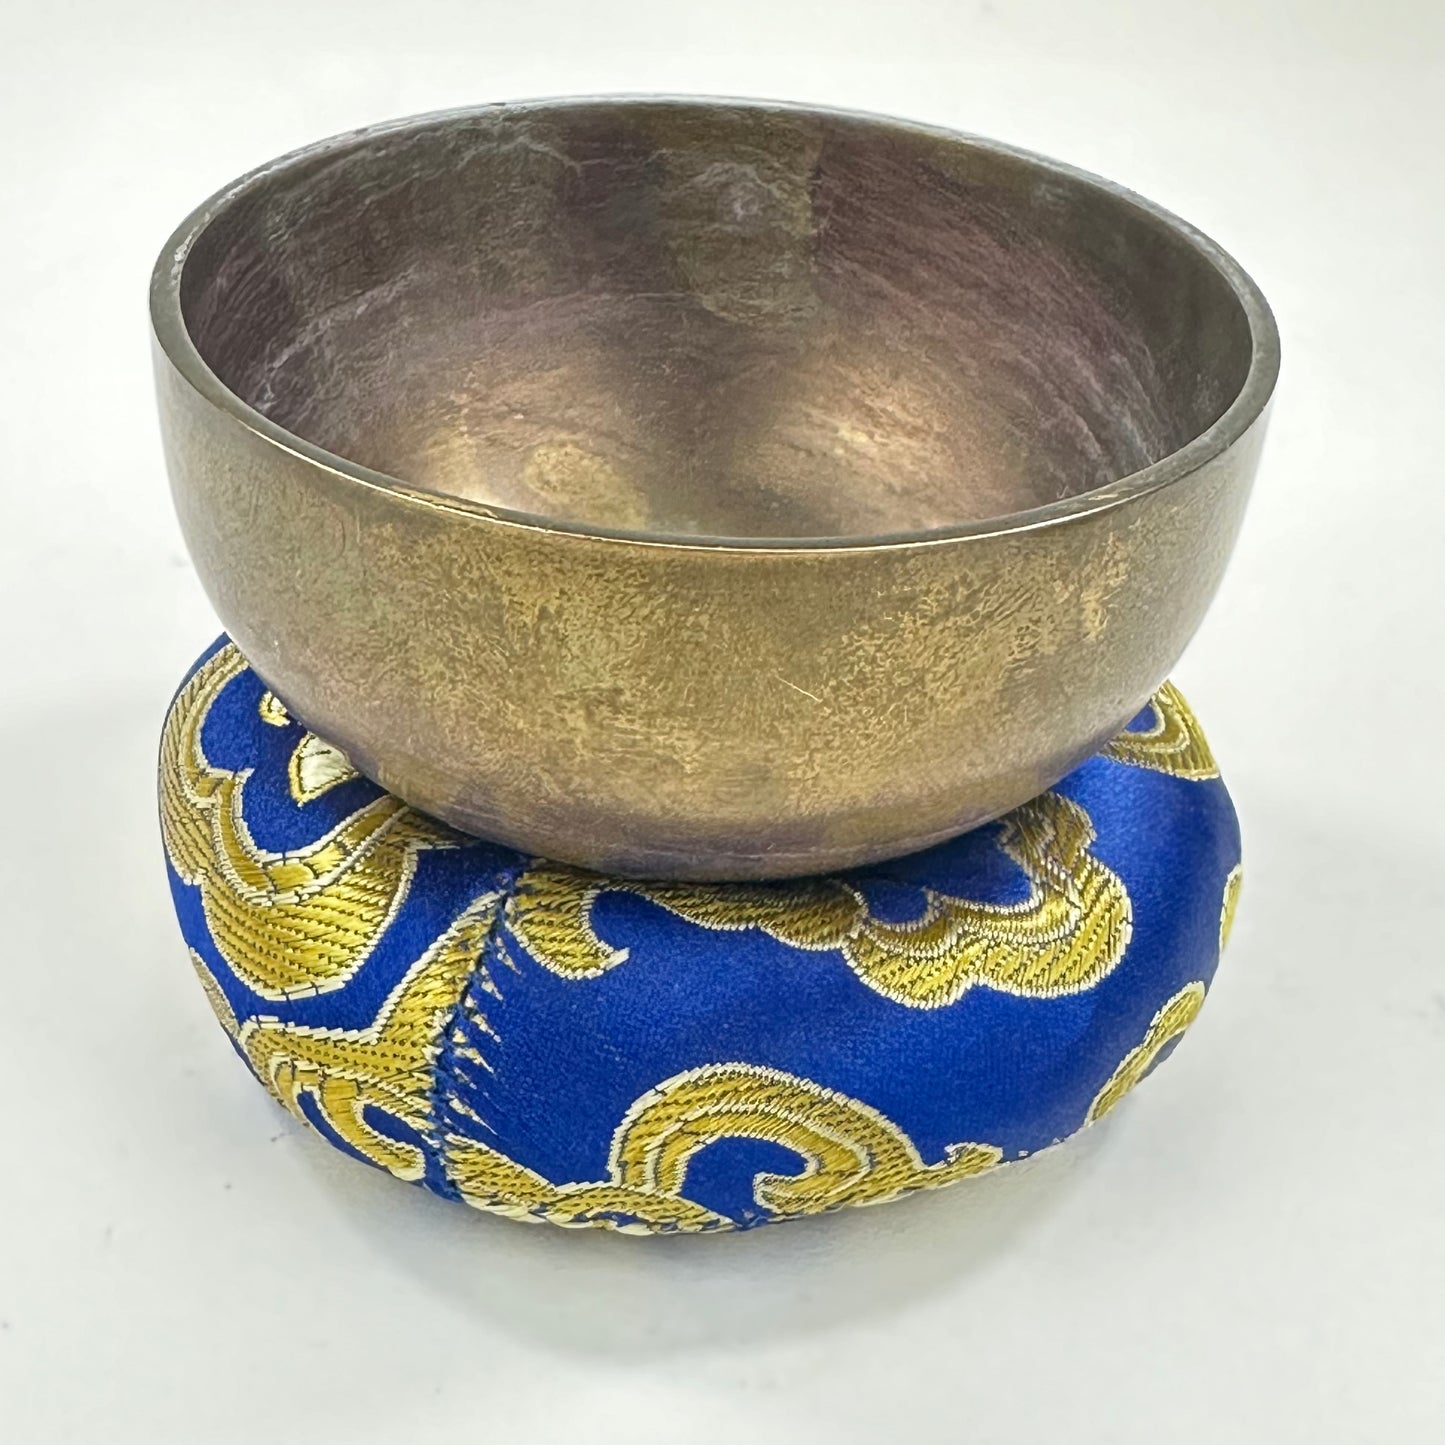 Vintage Japanese Orin Bell Brass Singing Bowl 3”